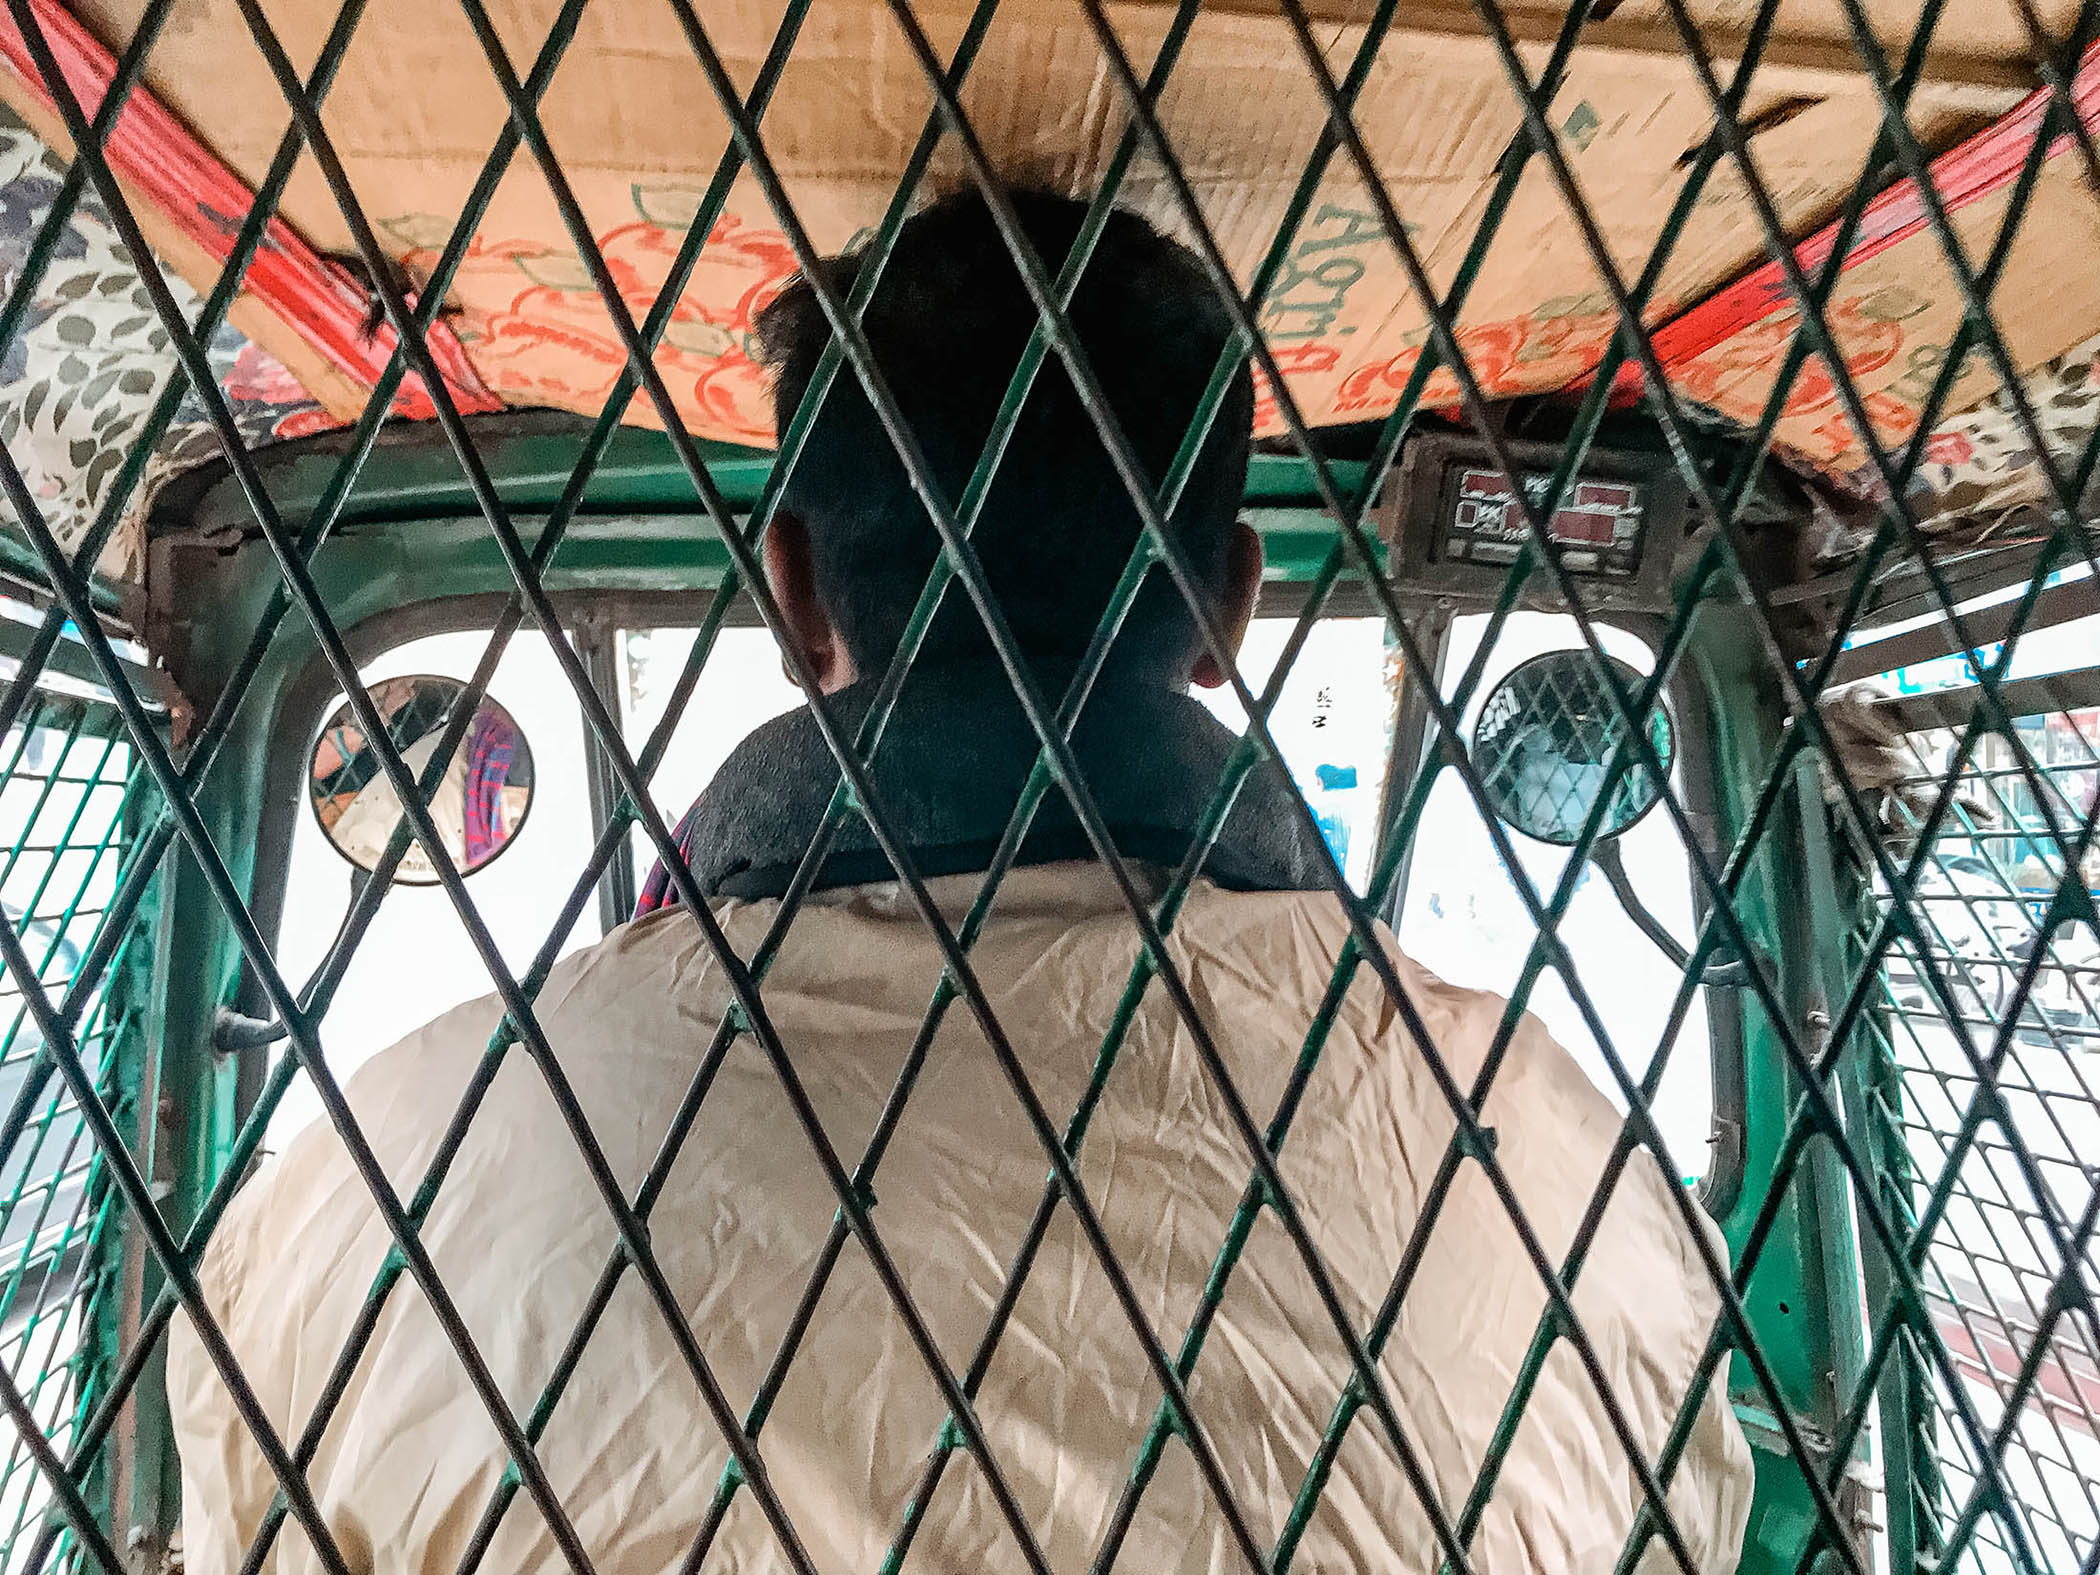 Stuck inside a rickshaw in traffic in Dhaka, Bangladesh-3